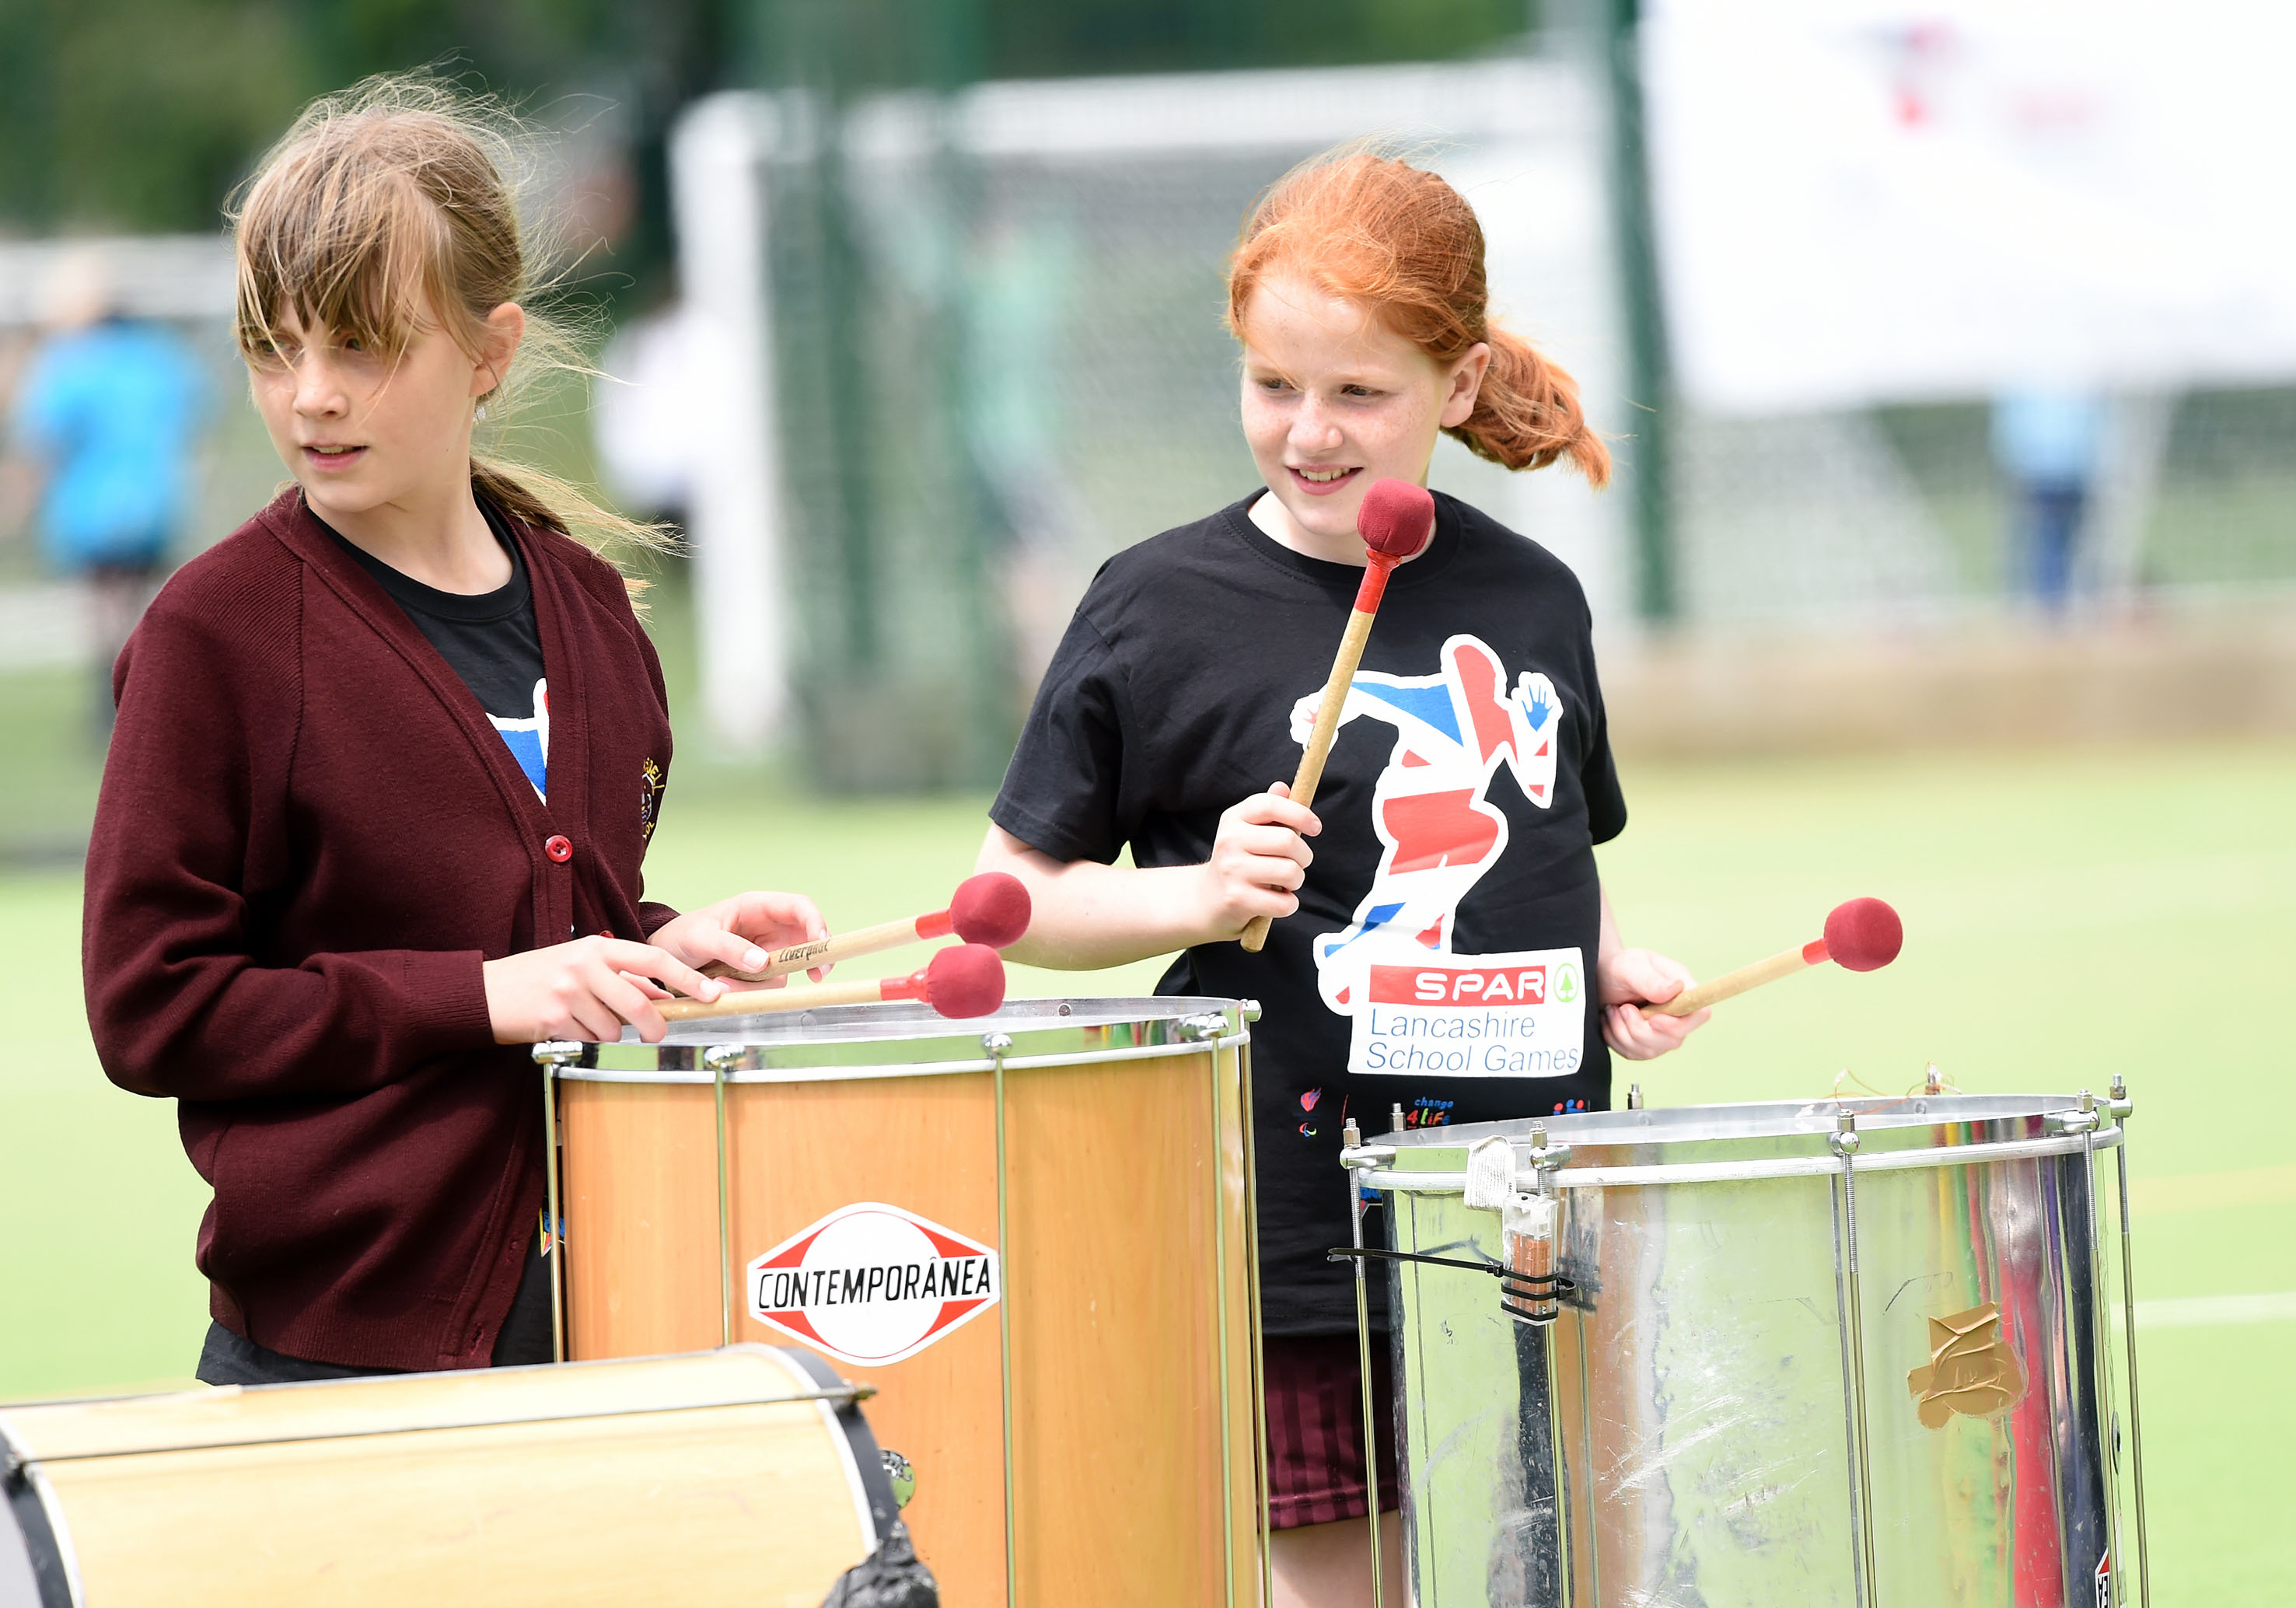 Lancashire School Games - Fylde samba drumming